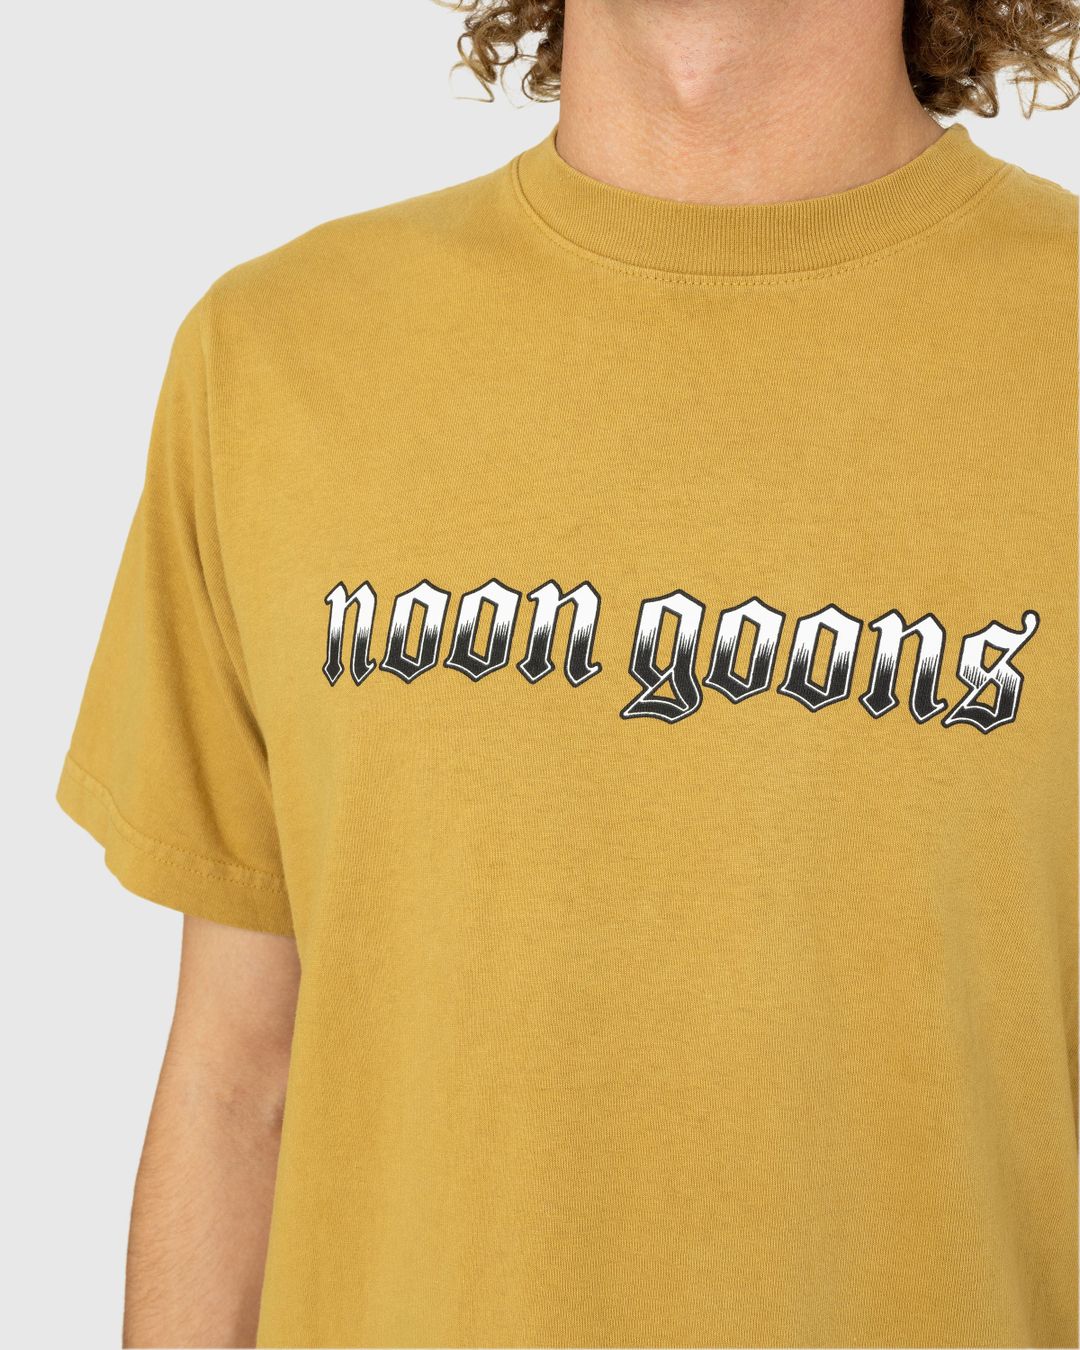 Noon Goons – OG OE T-Shirt Harvest Gold | Highsnobiety Shop